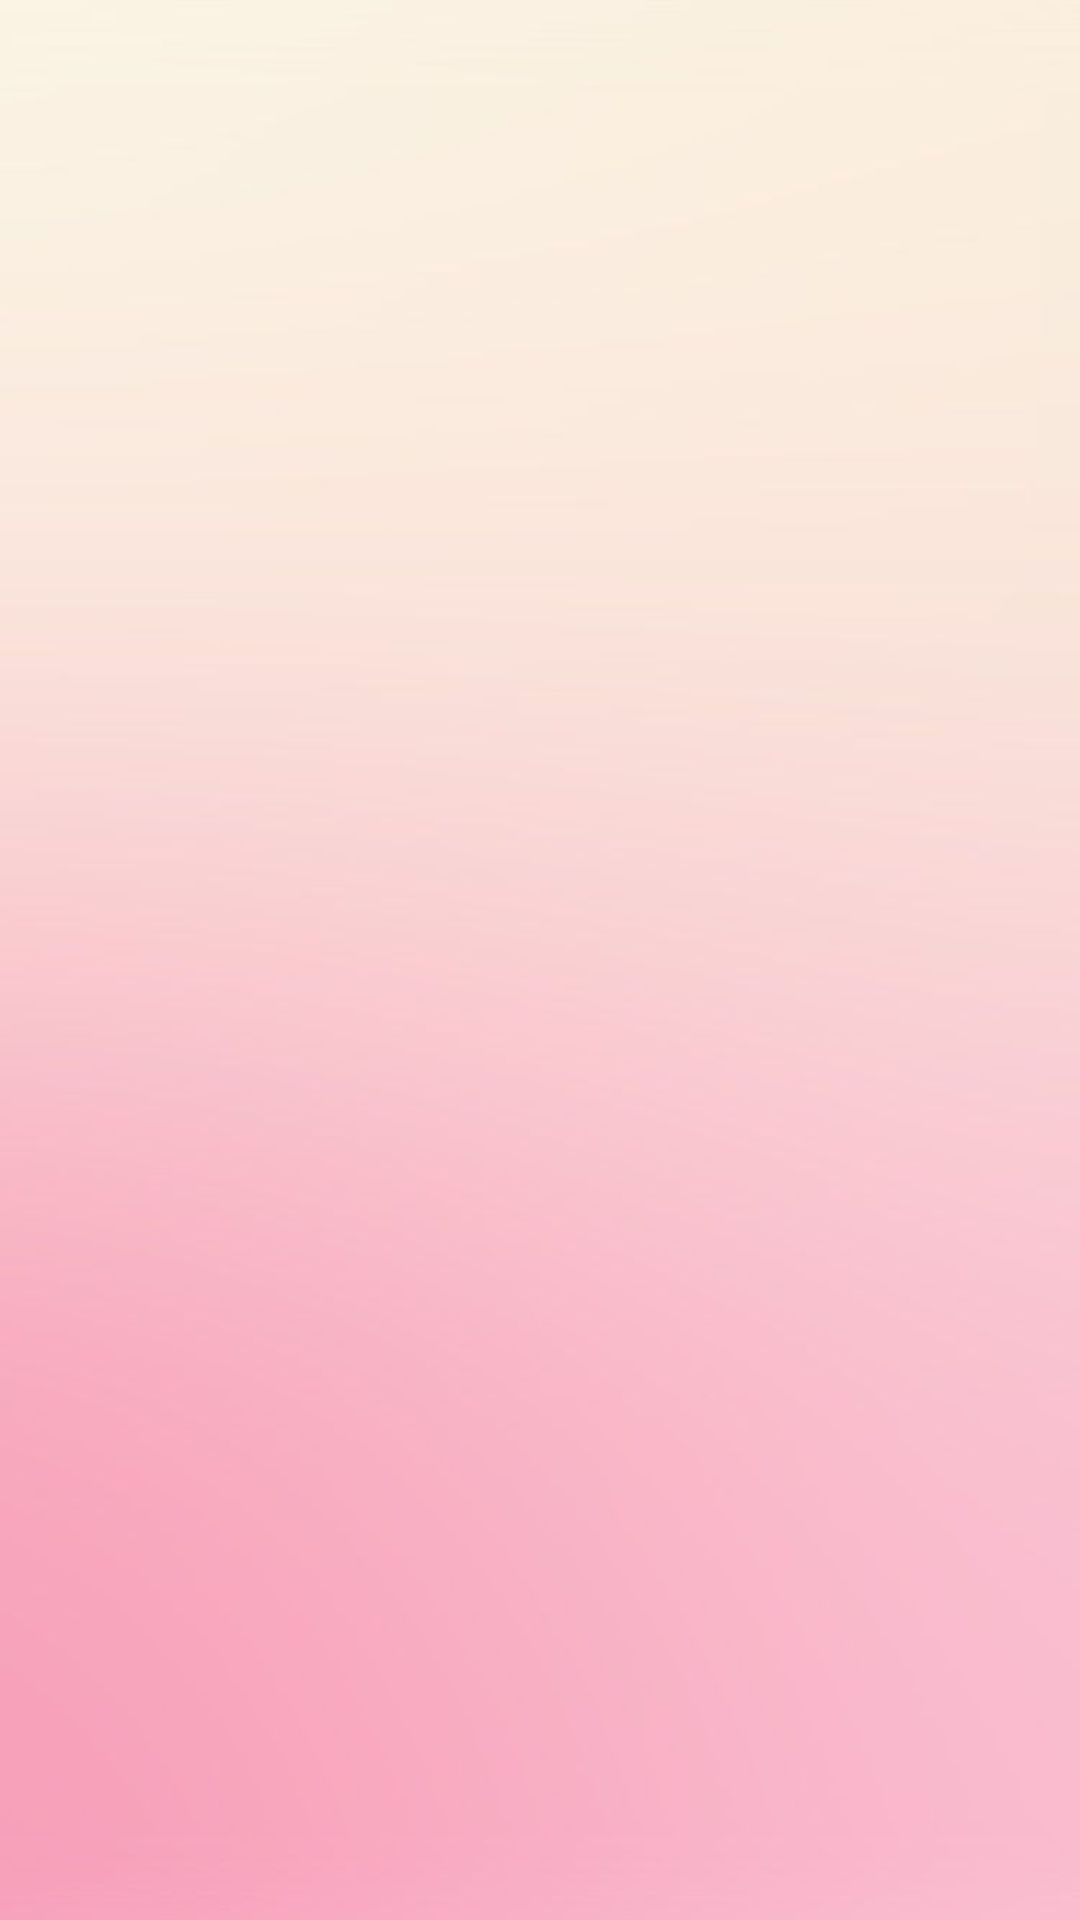 Aesthetic Pink Wallpaper iPhone 8